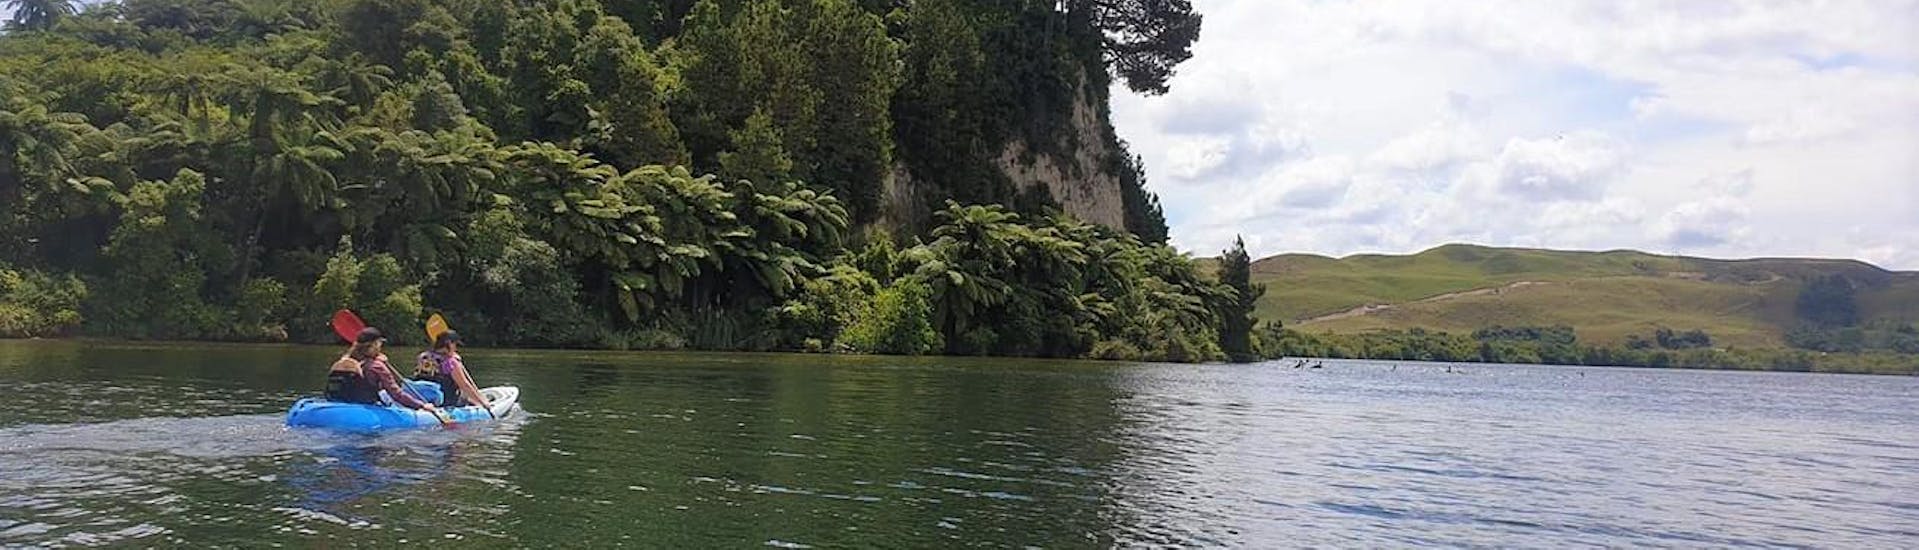 Steaming Kayak Rotorua - Waikato River